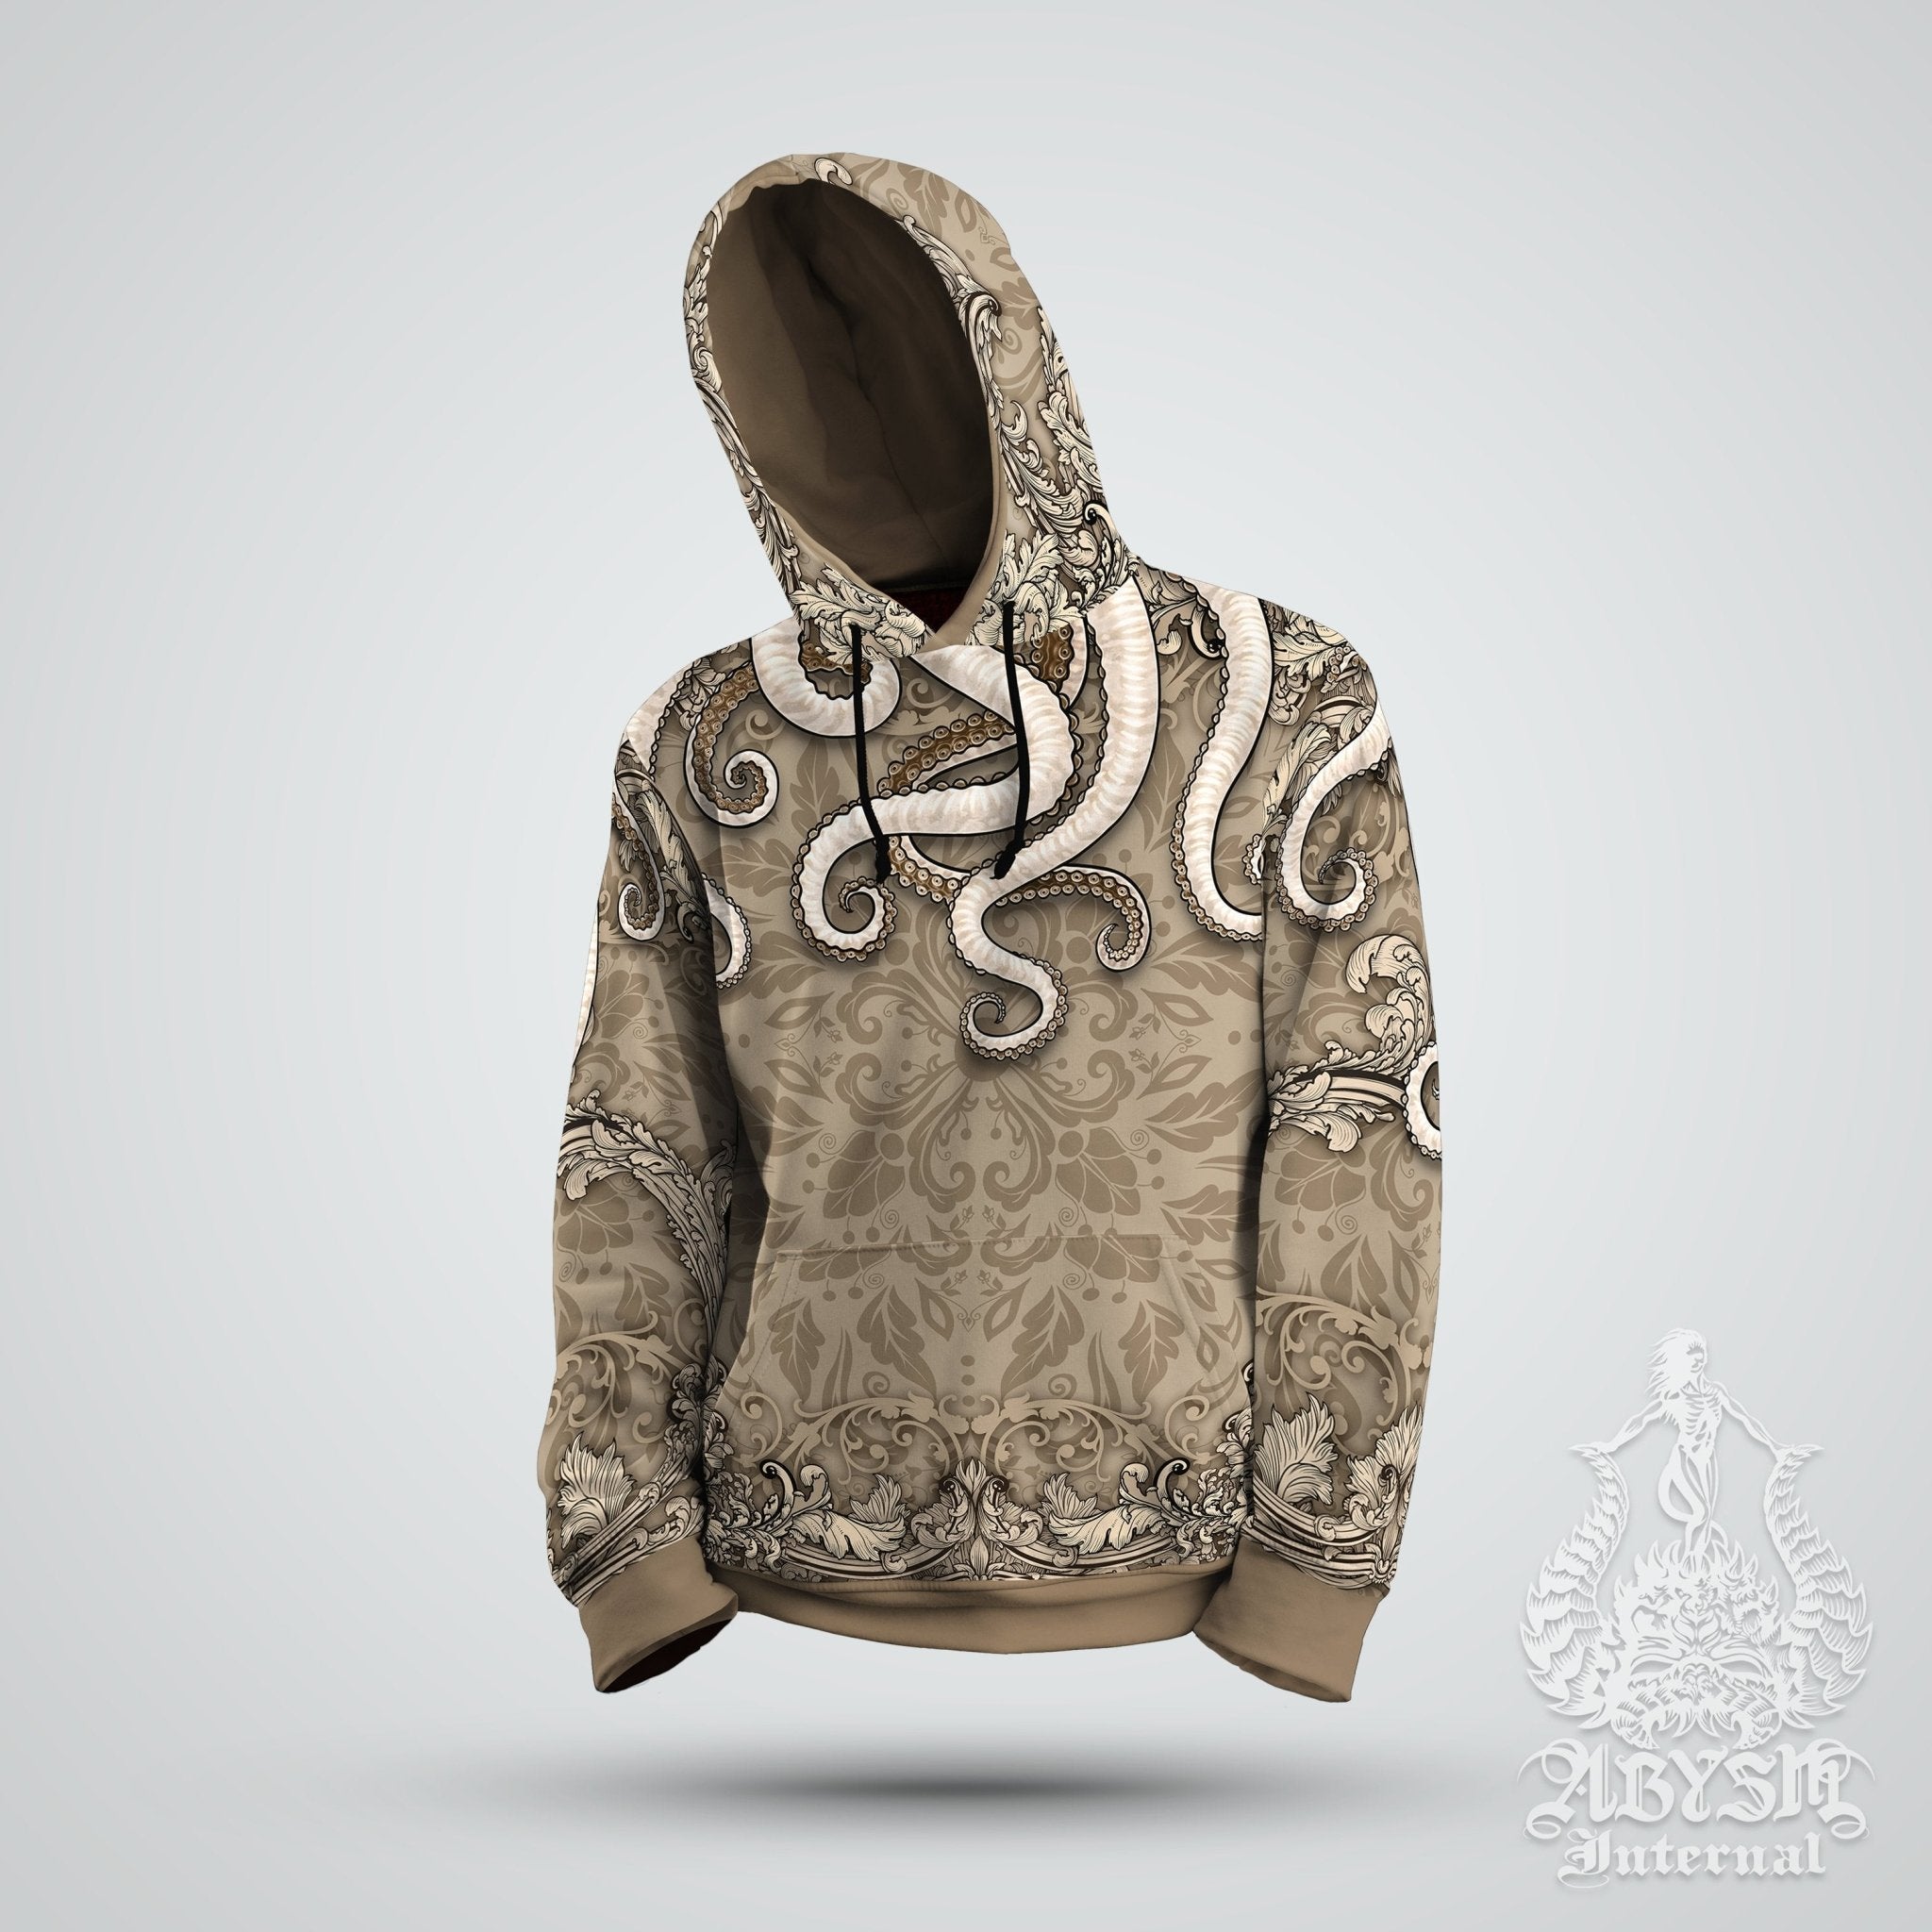 Octopus Hoodie, Street Outfit, Graffiti Streetwear, Festival Apparel, Alternative Clothing, Unisex - Cream - Abysm Internal